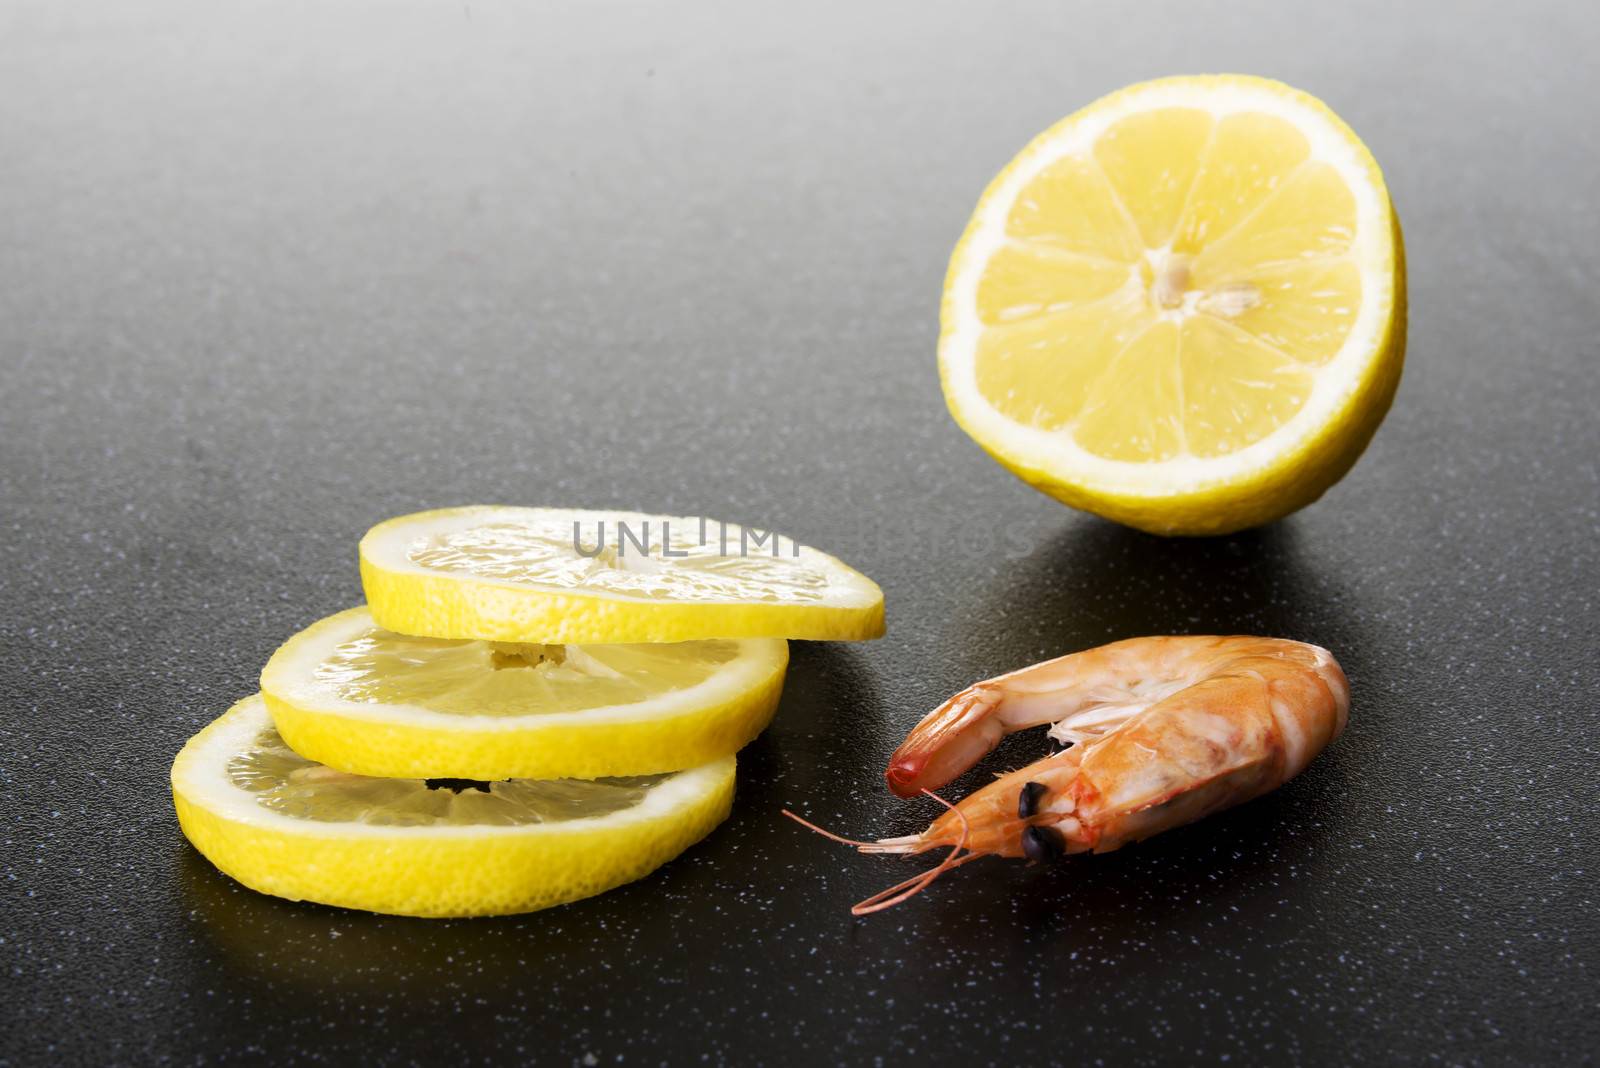 Fresh shrimps with lemon. On a kitchen table.